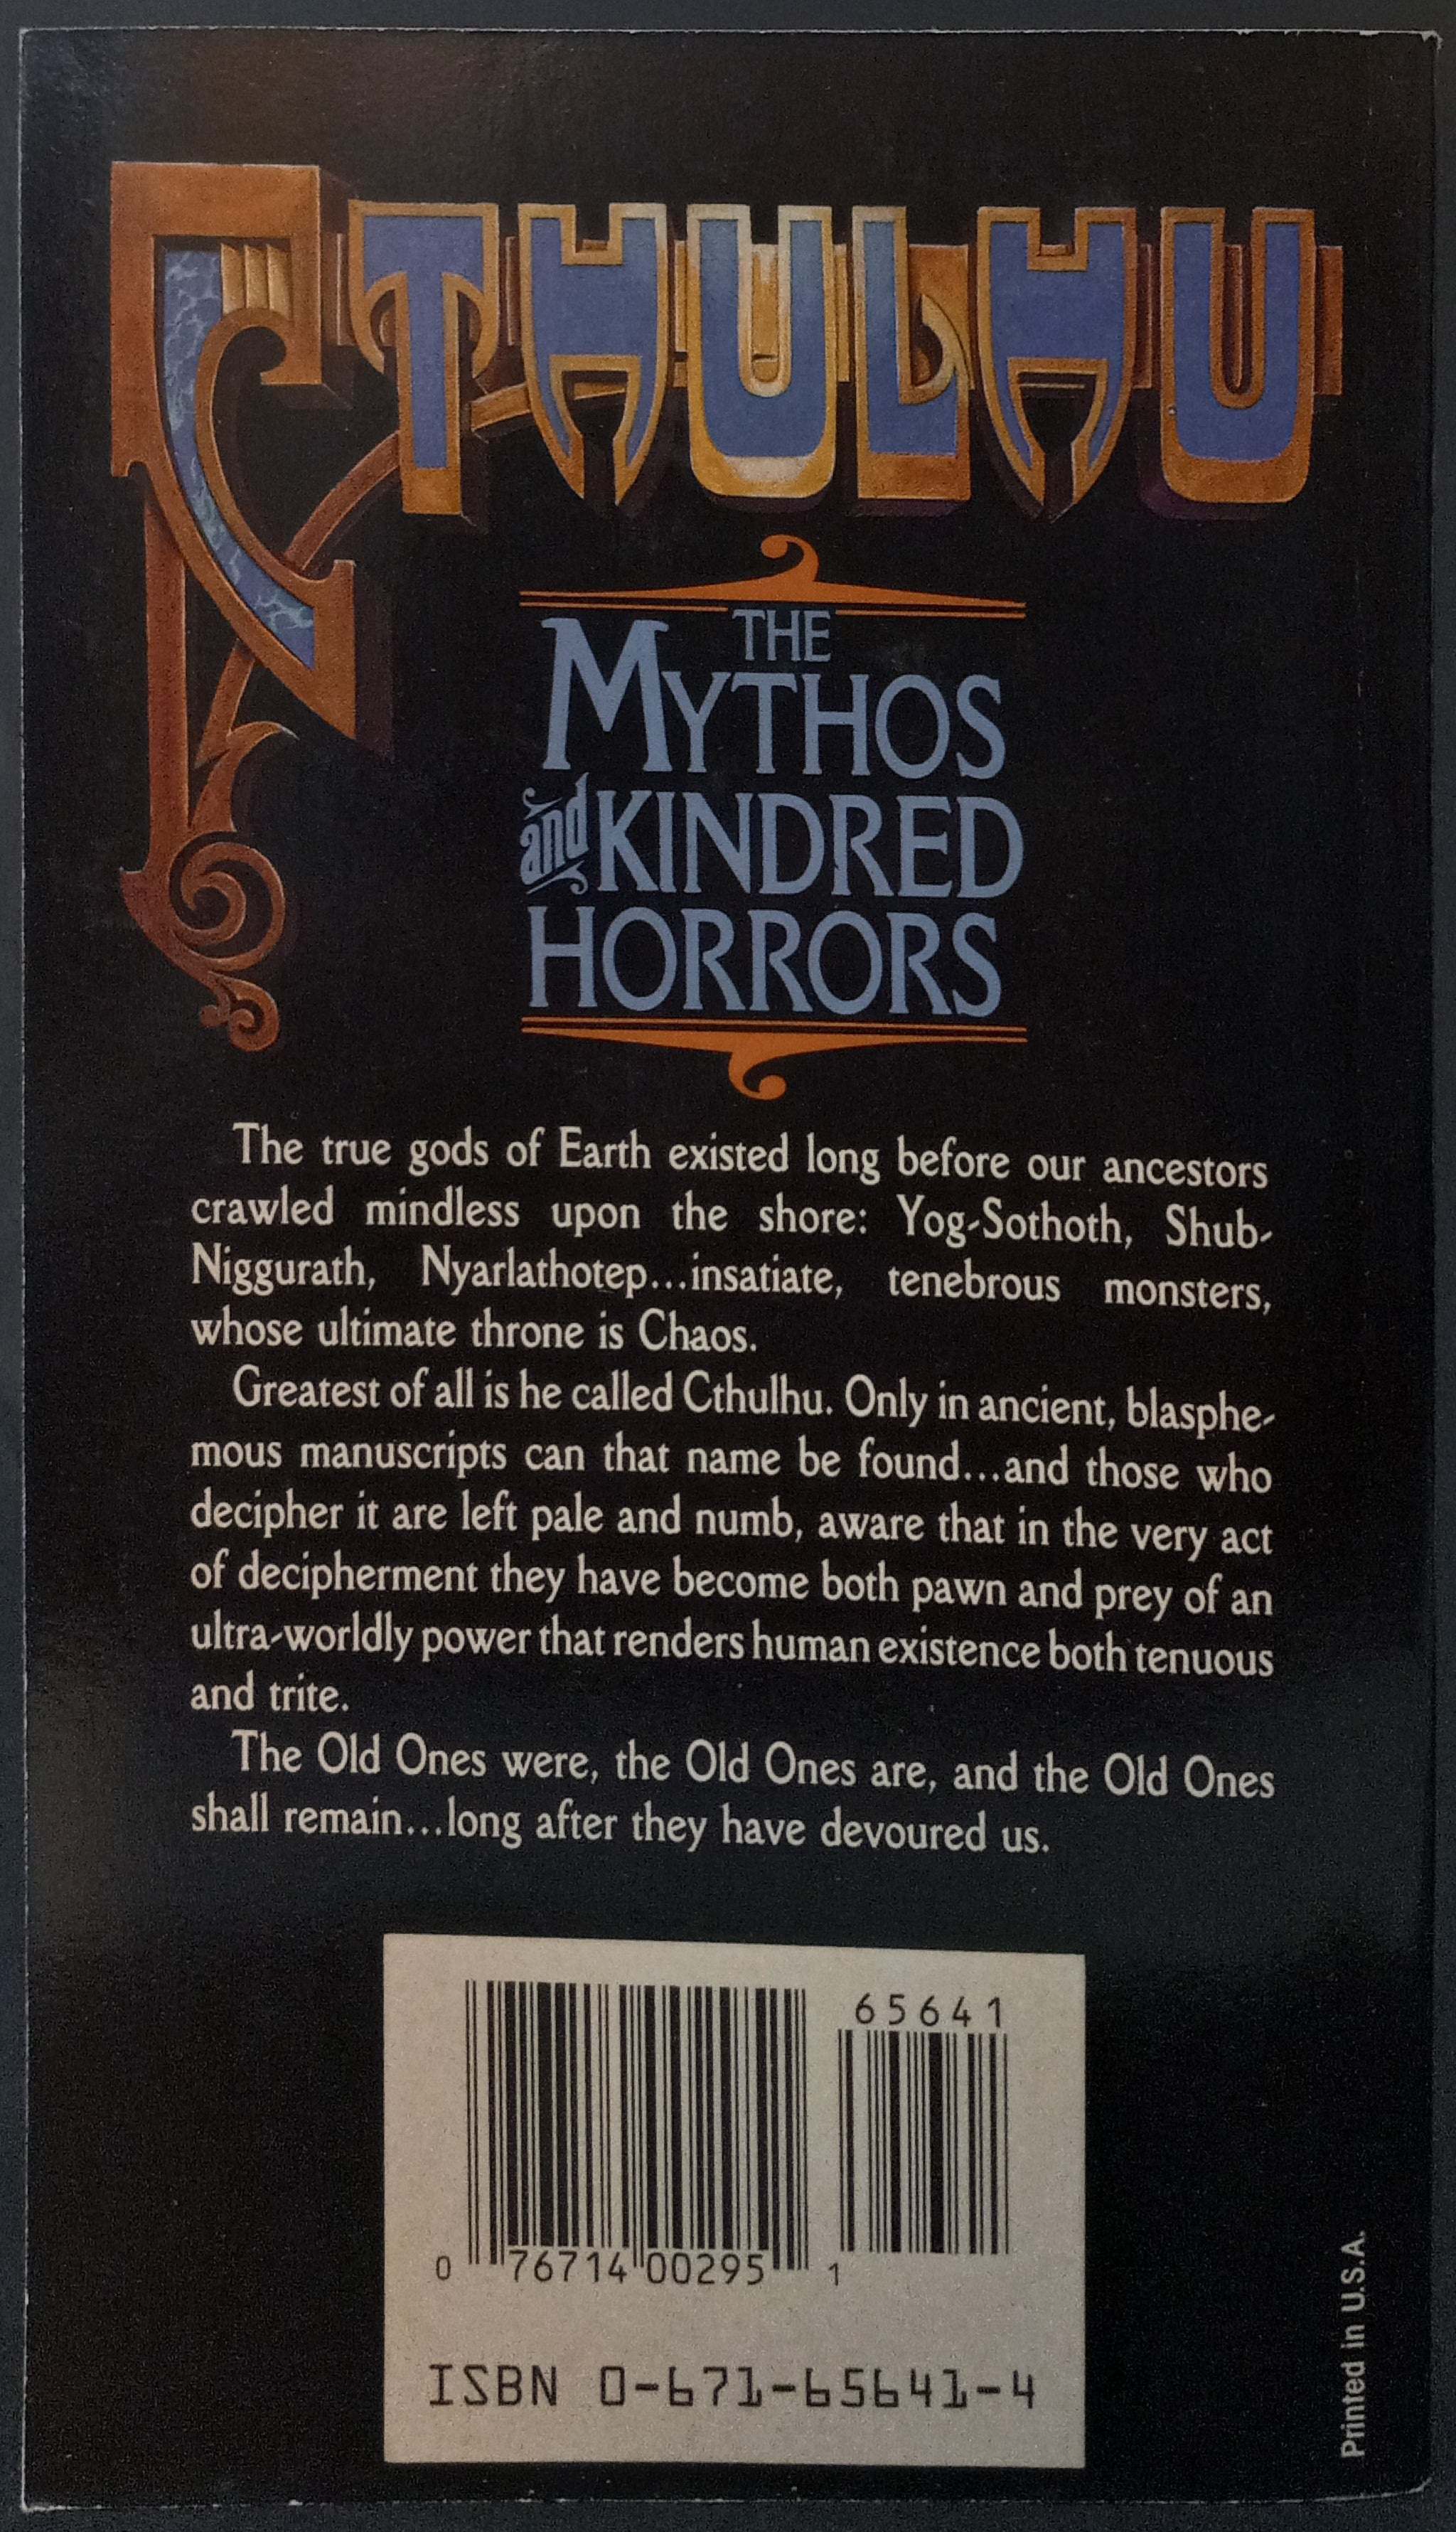 How long is Mythos?